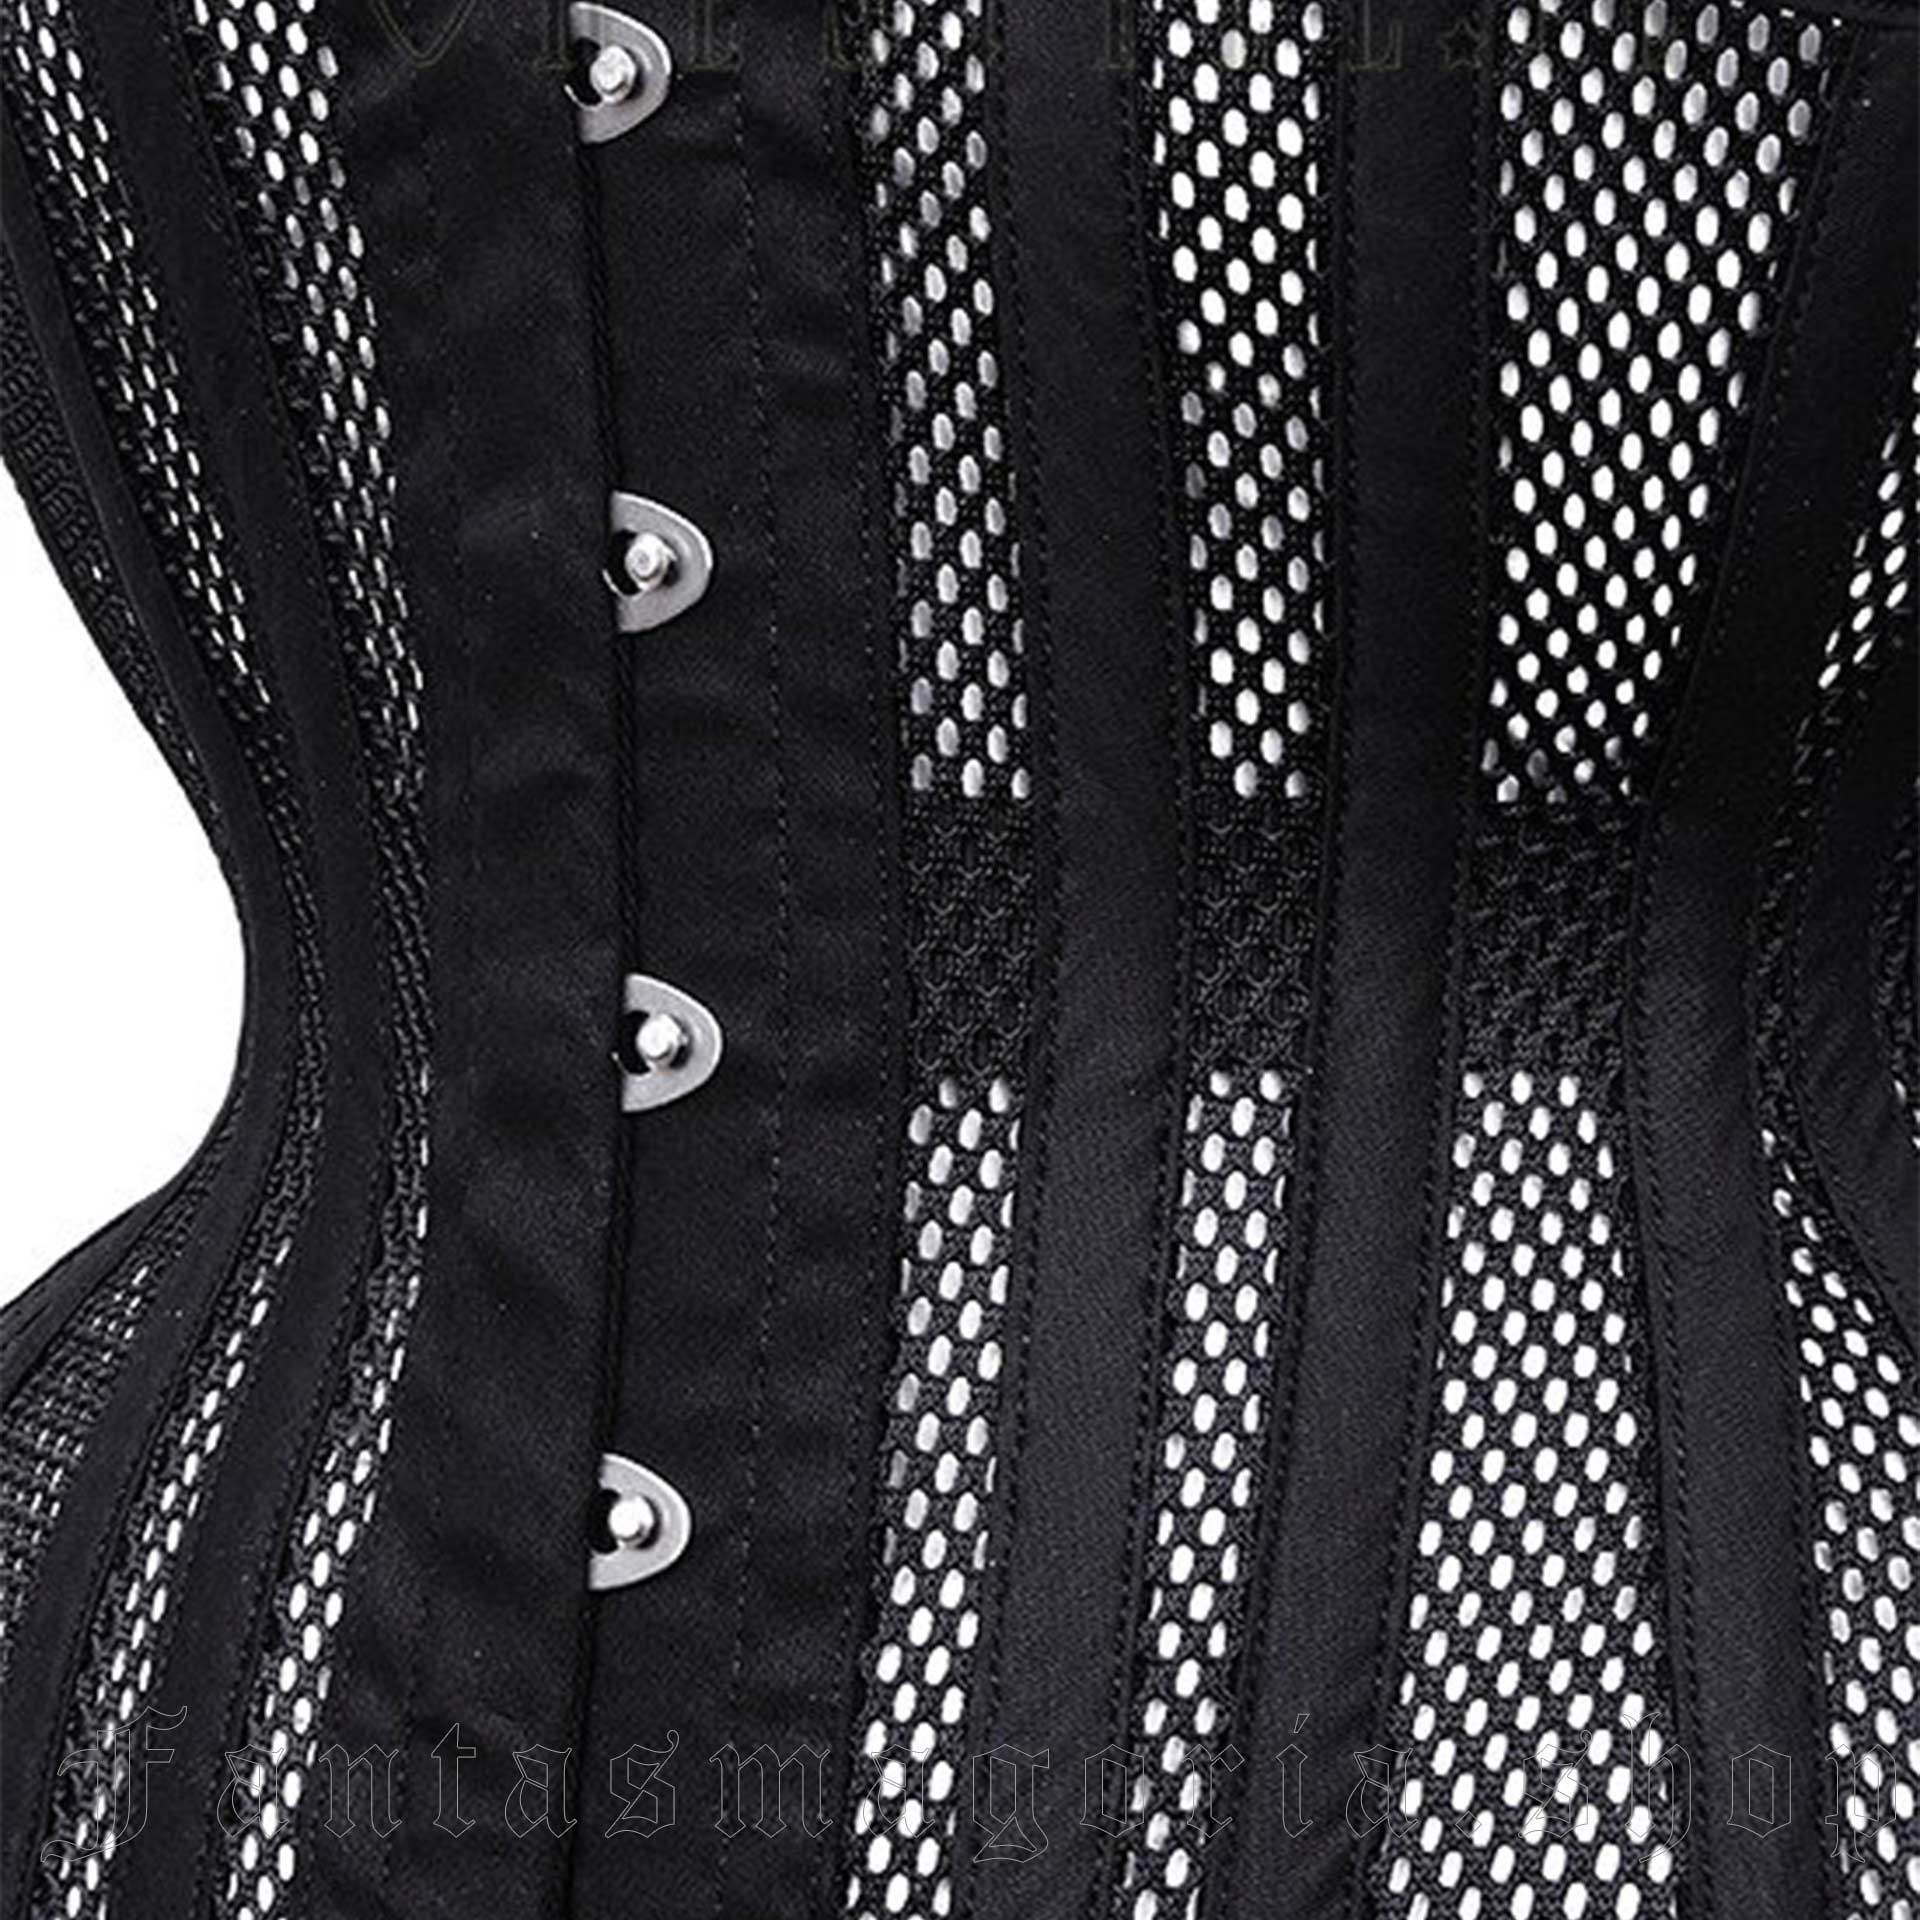 Black cotton underbust hourglass corset WIDE HIPS MATT - Restyle